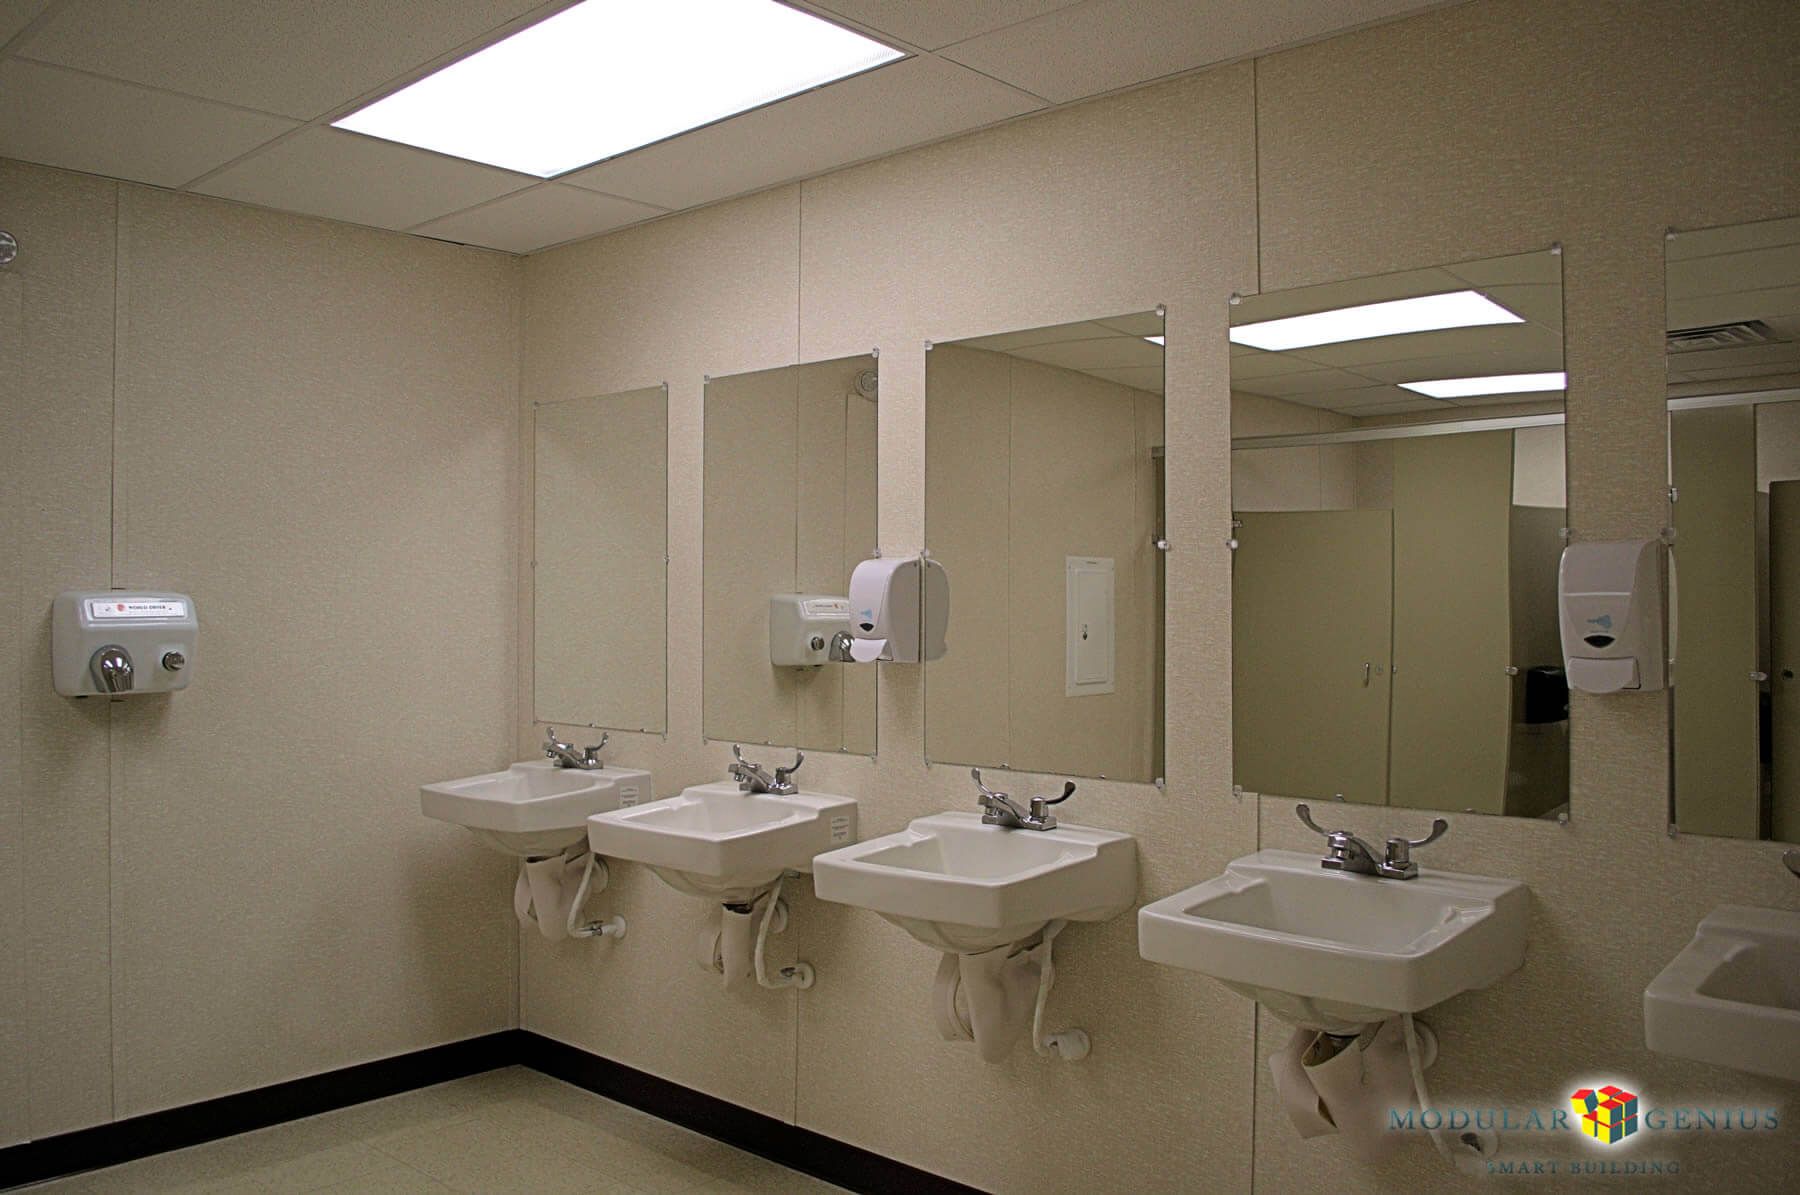 Summersville-Middle-School-Modular-Building-Bathroom